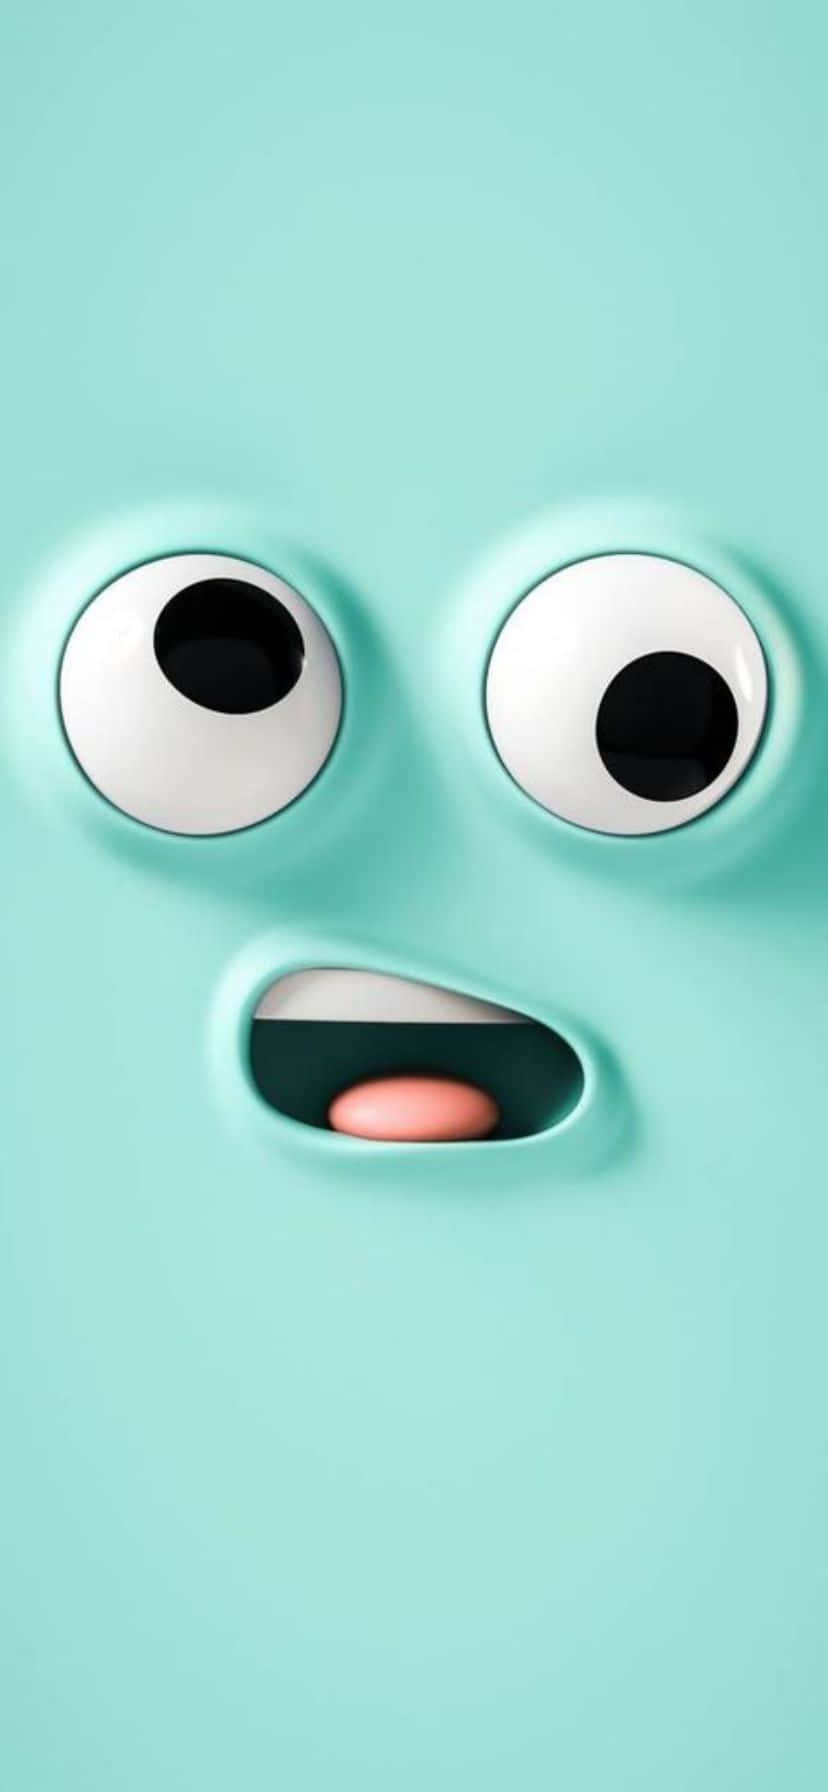 Surprised Face Emoji Wallpaper Wallpaper